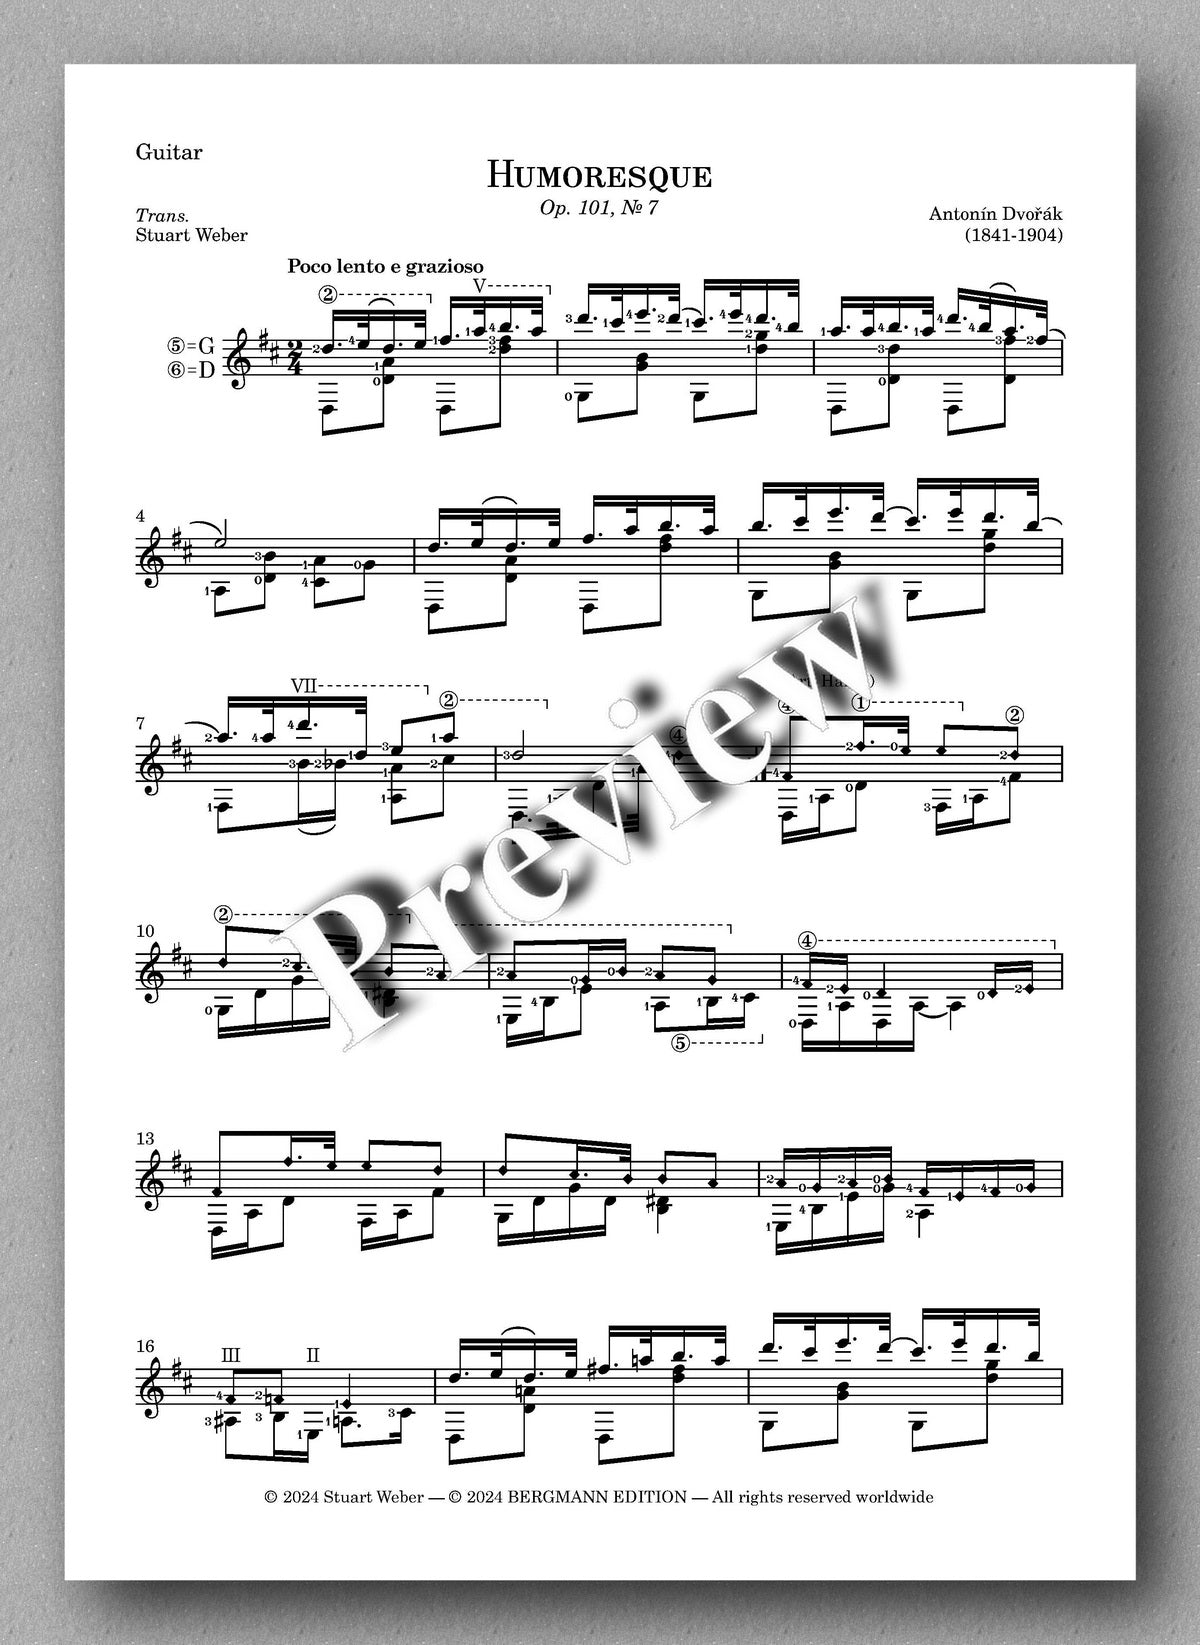 Antonín Dvořák, Humoresque, Op. 101, No. 7 - preview of the music score